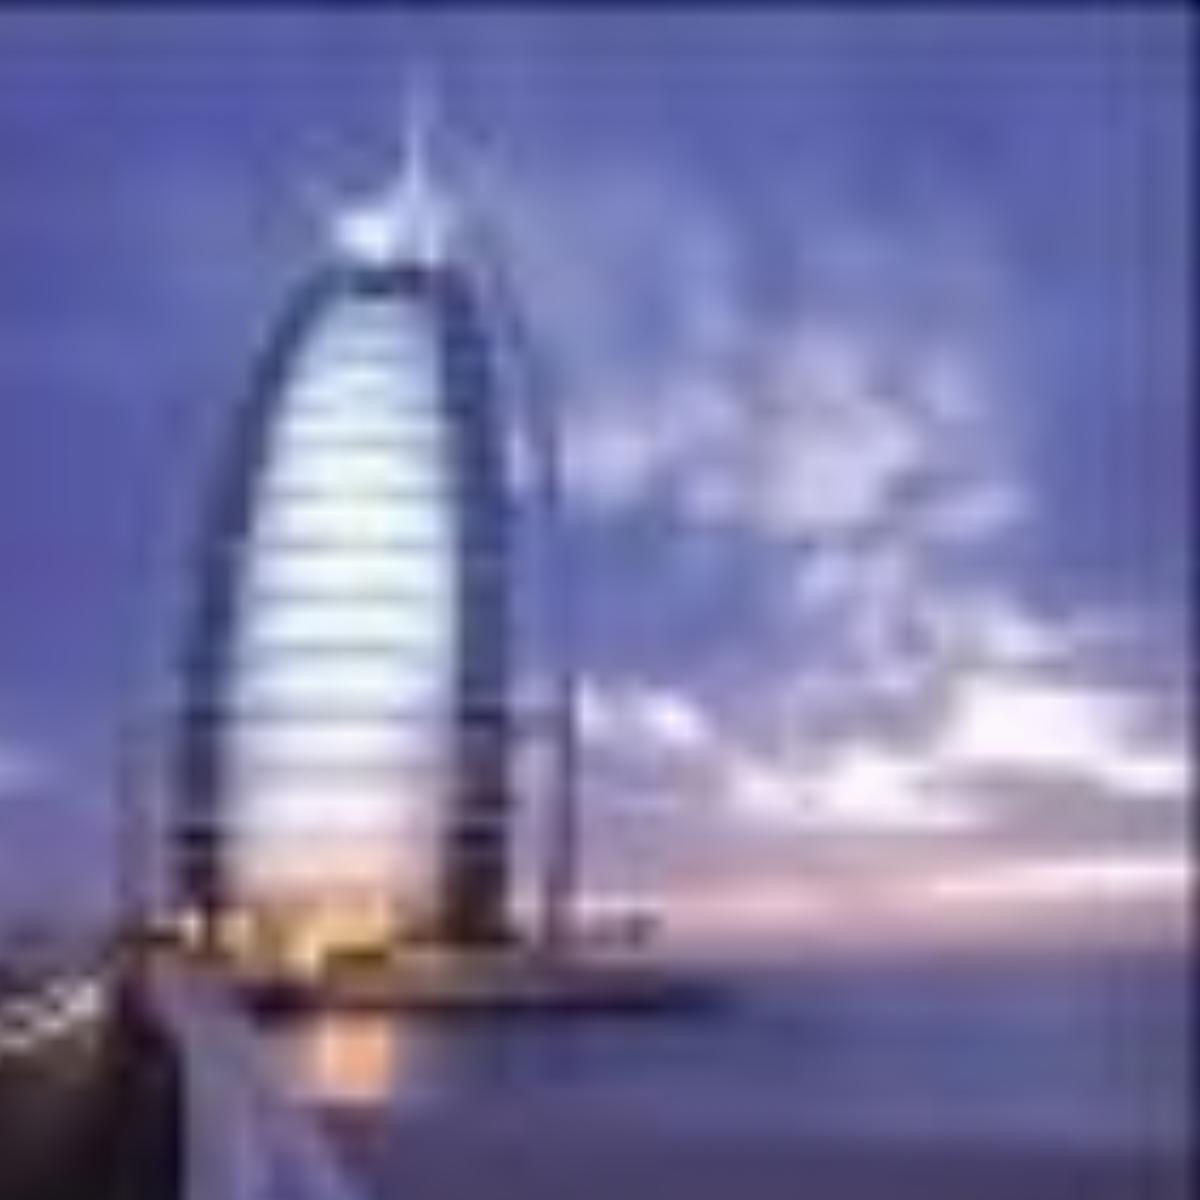 Burj Al Arab Hotel Dubai United Arab Emirates